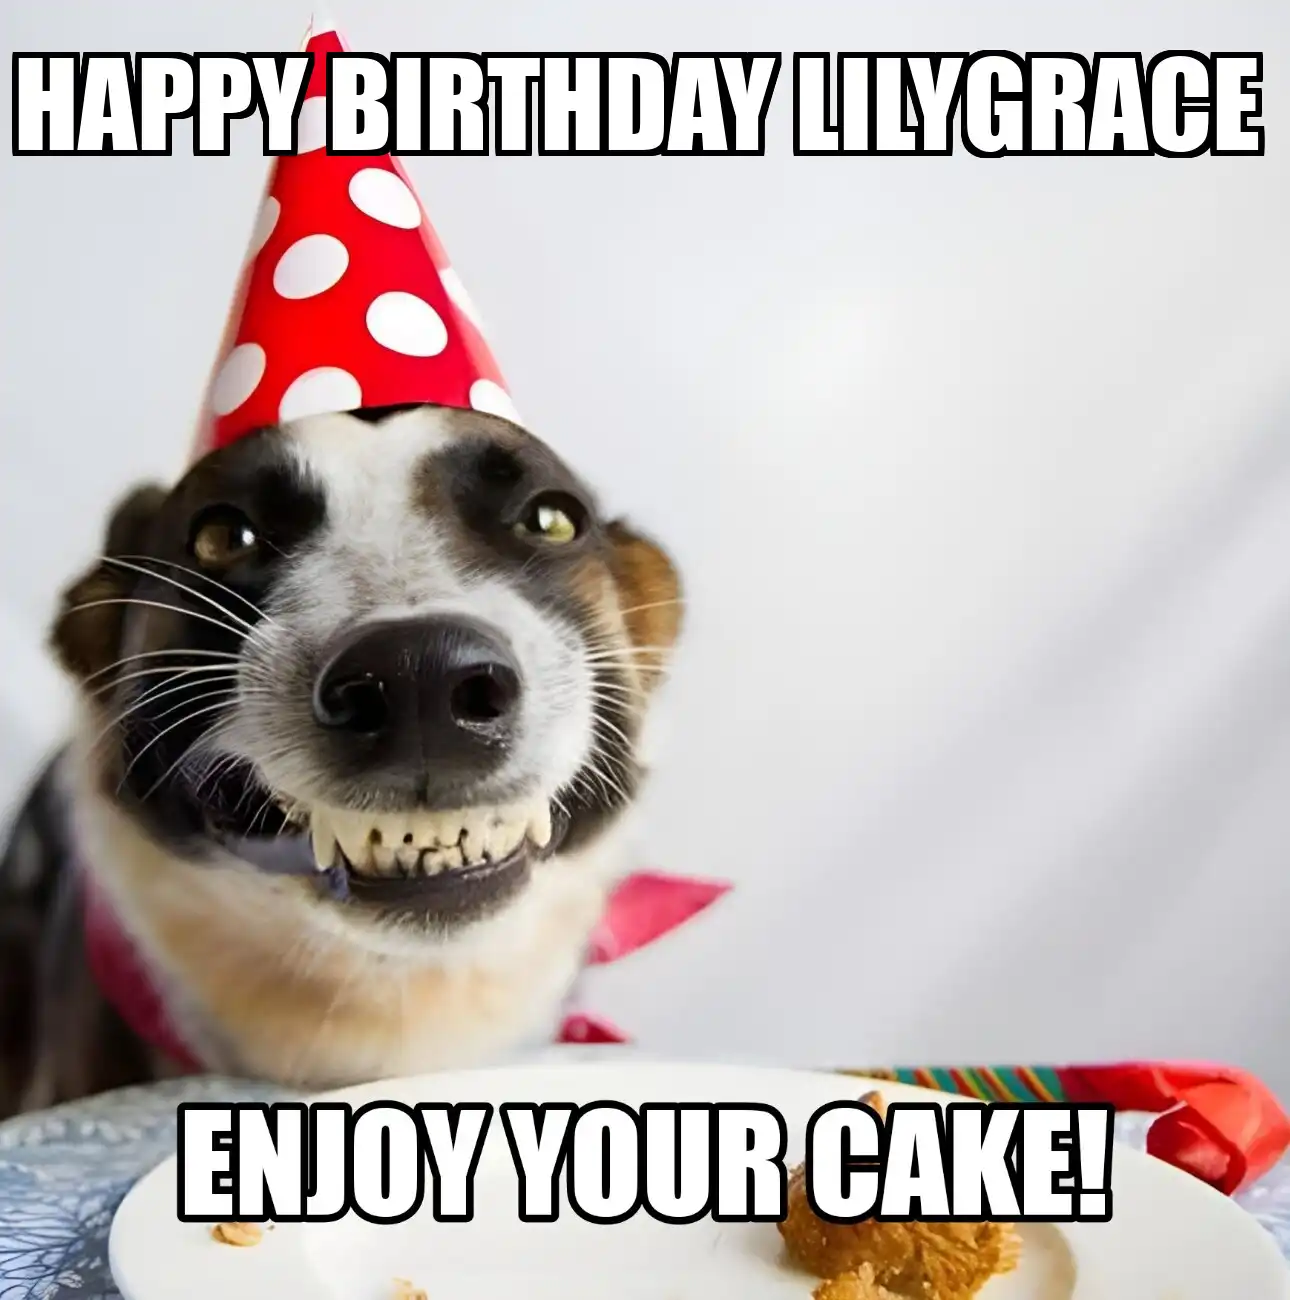 Happy Birthday Lilygrace Enjoy Your Cake Dog Meme